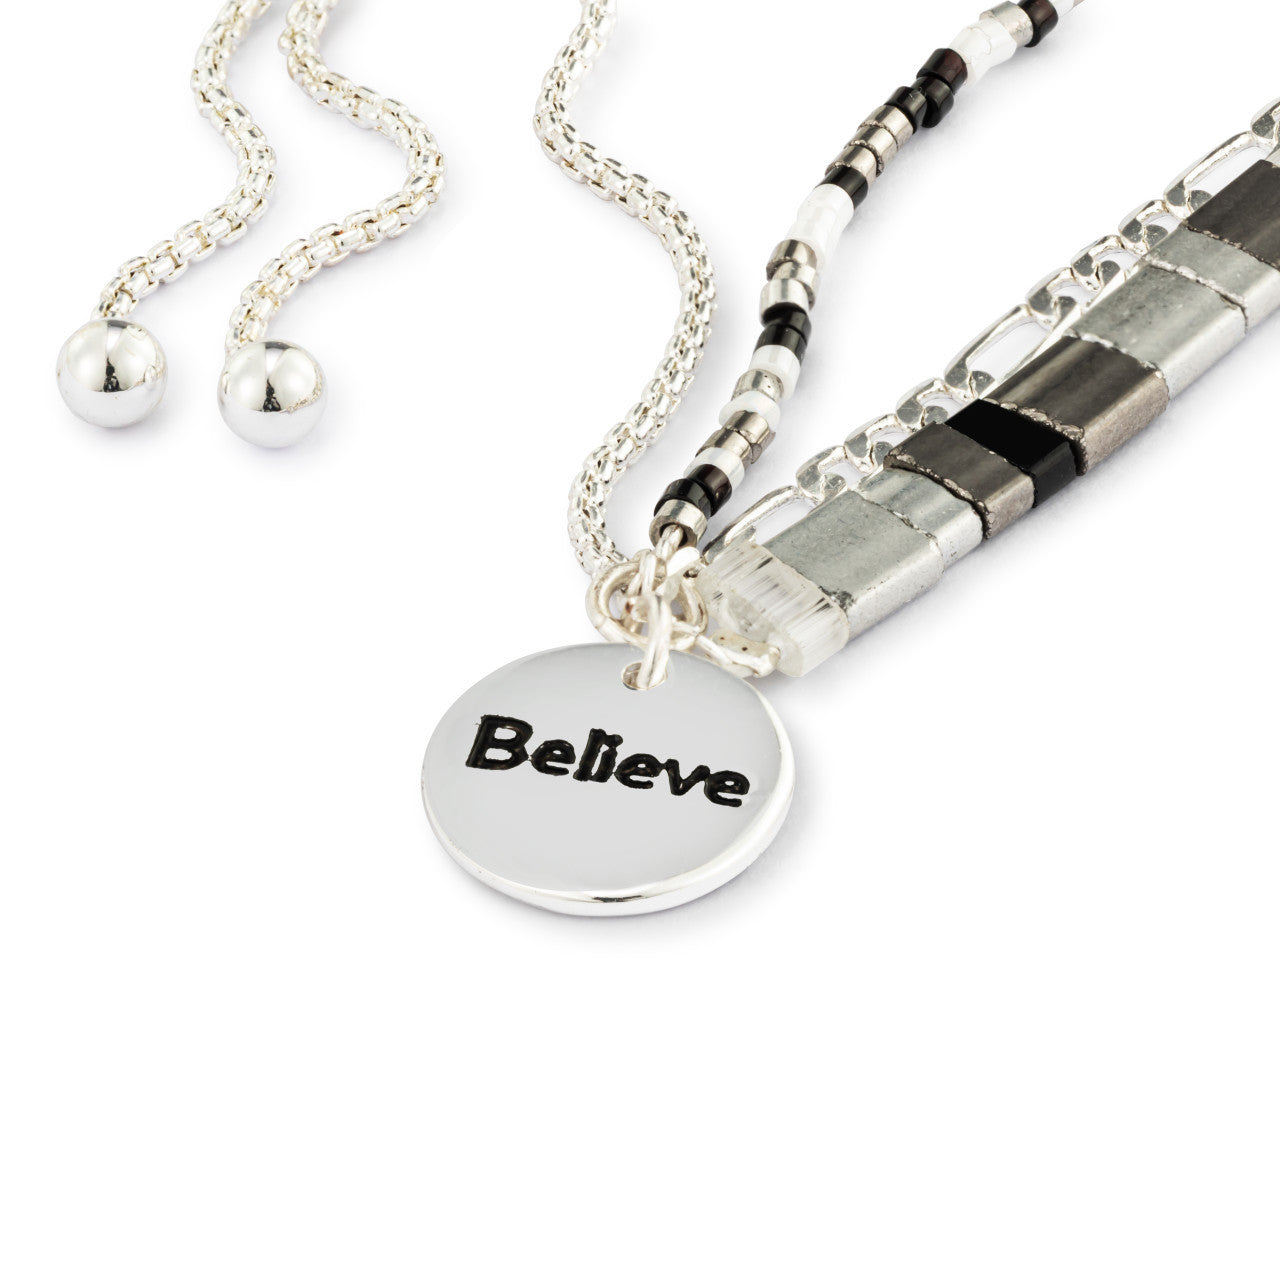 Your Journey Tile Bracelet - Believe